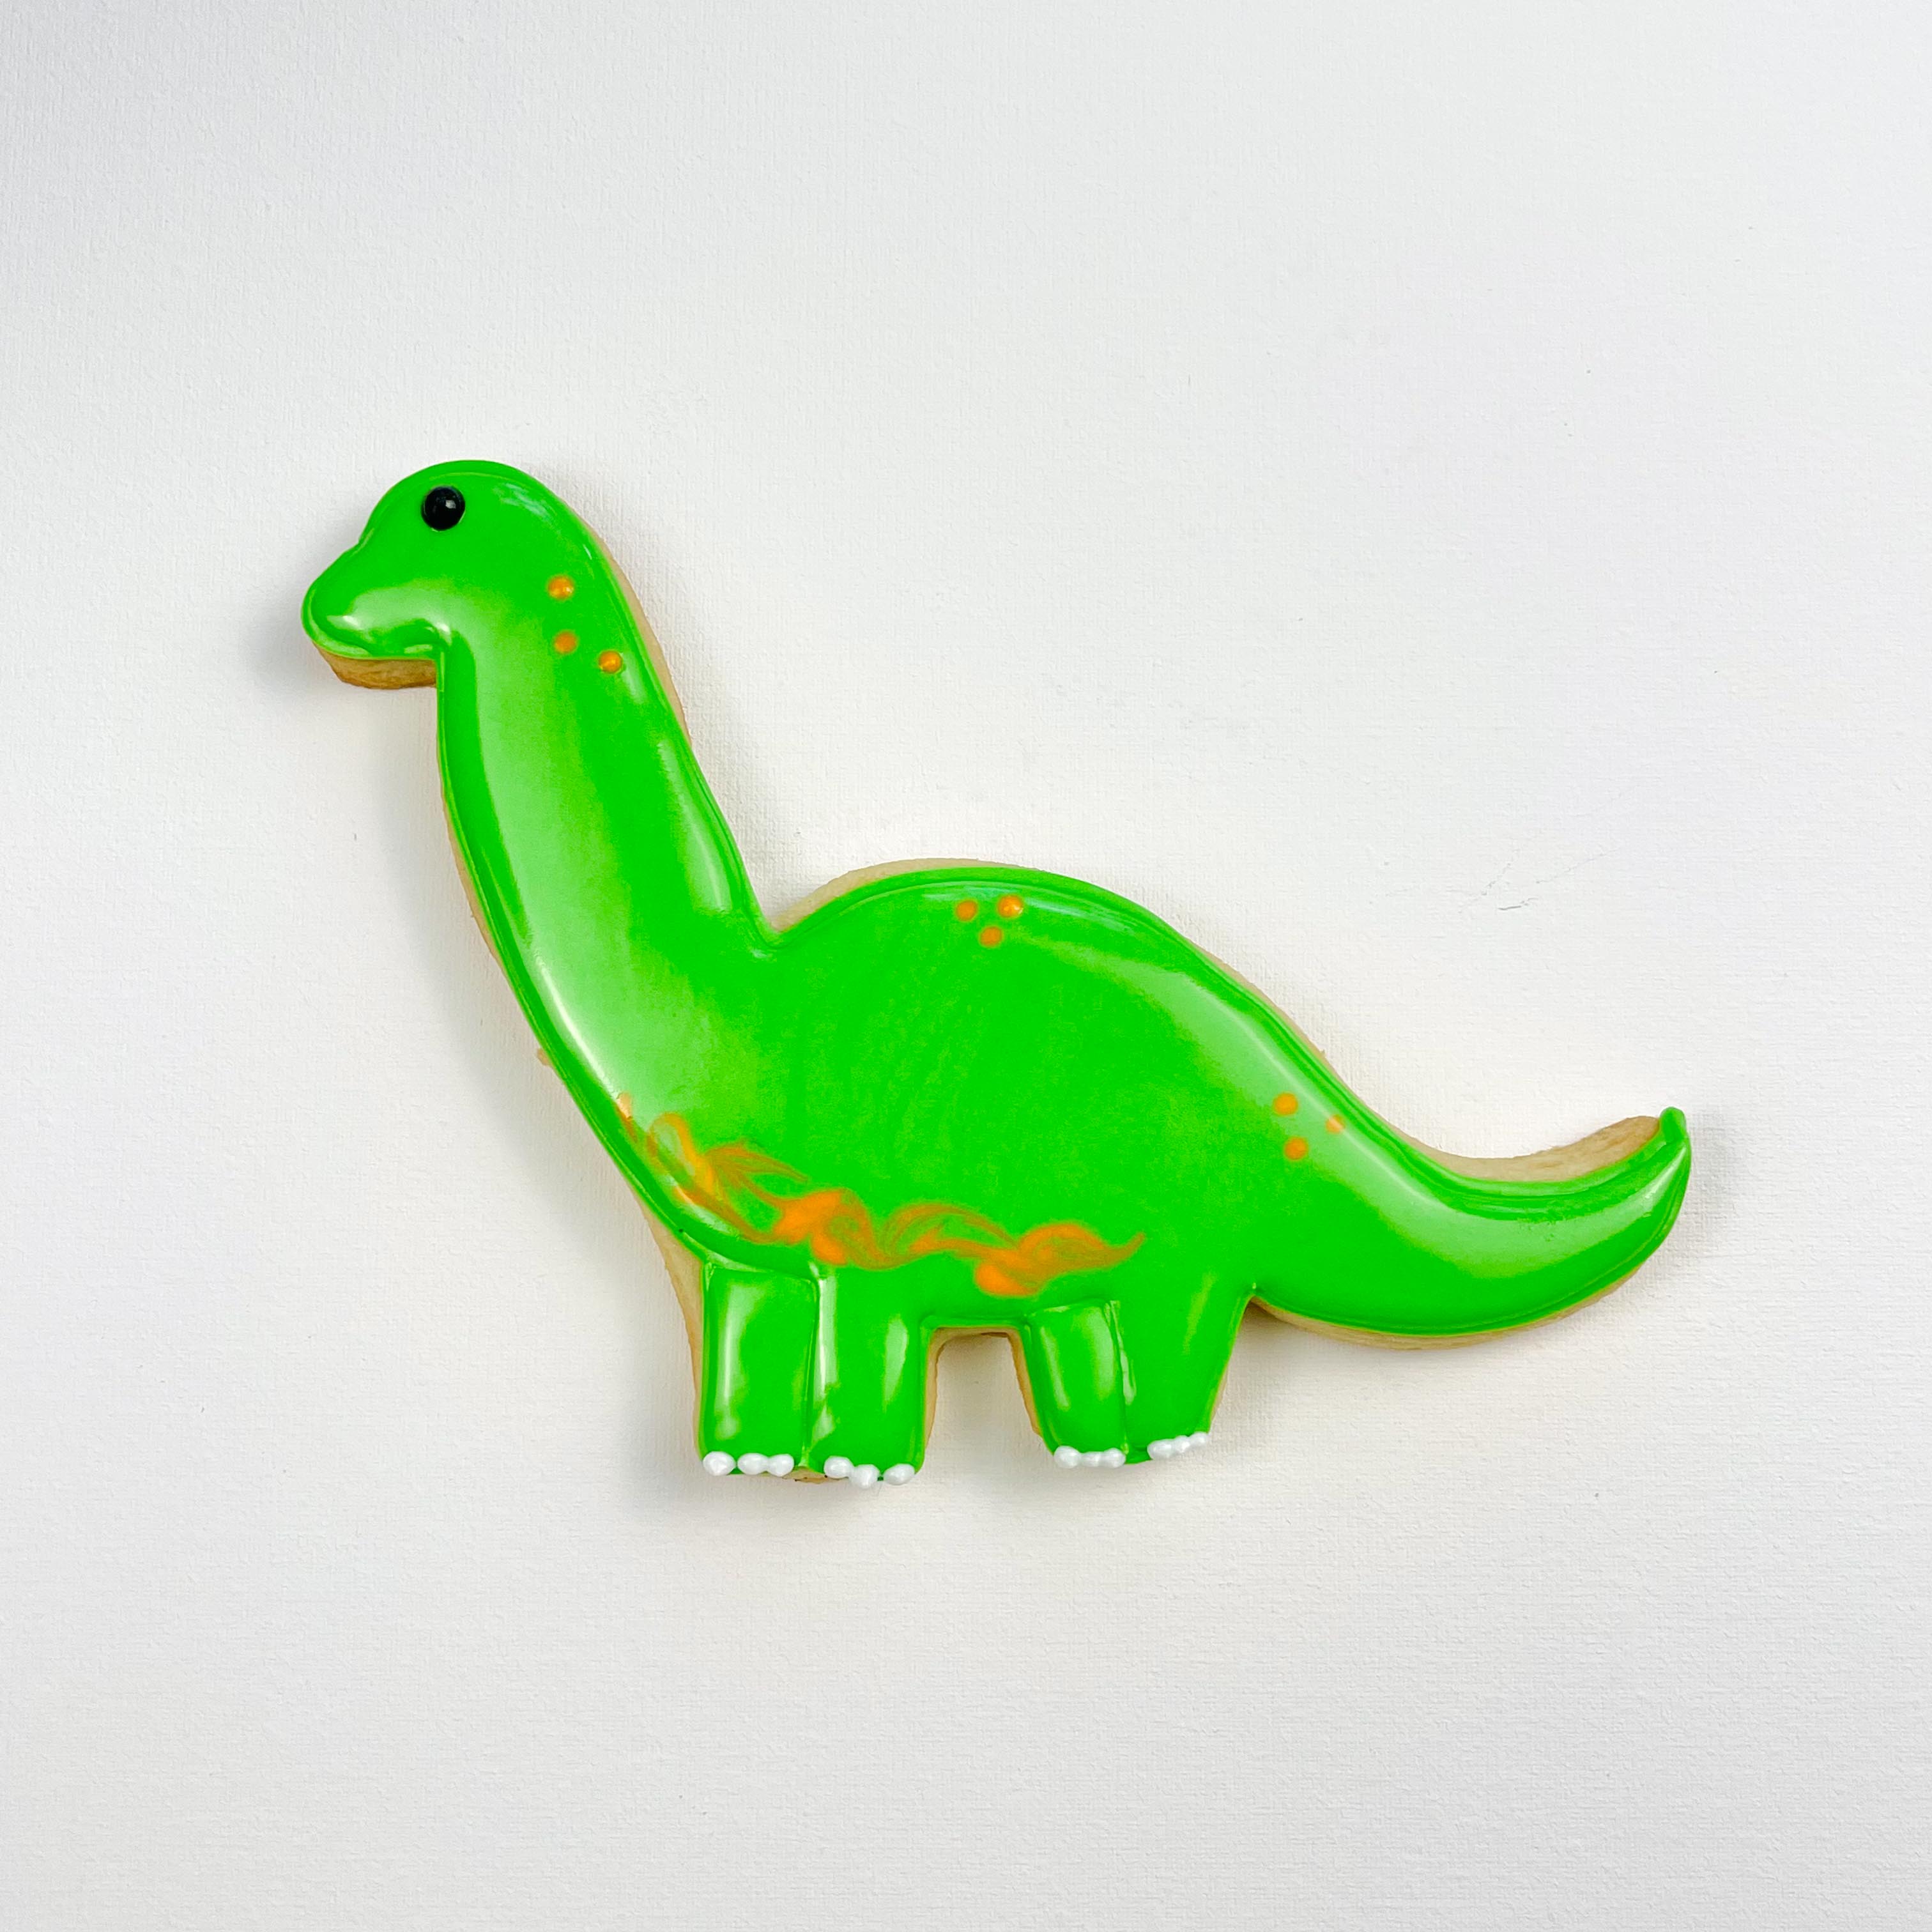 How to Decorate Brontosaurus Sugar Cookies